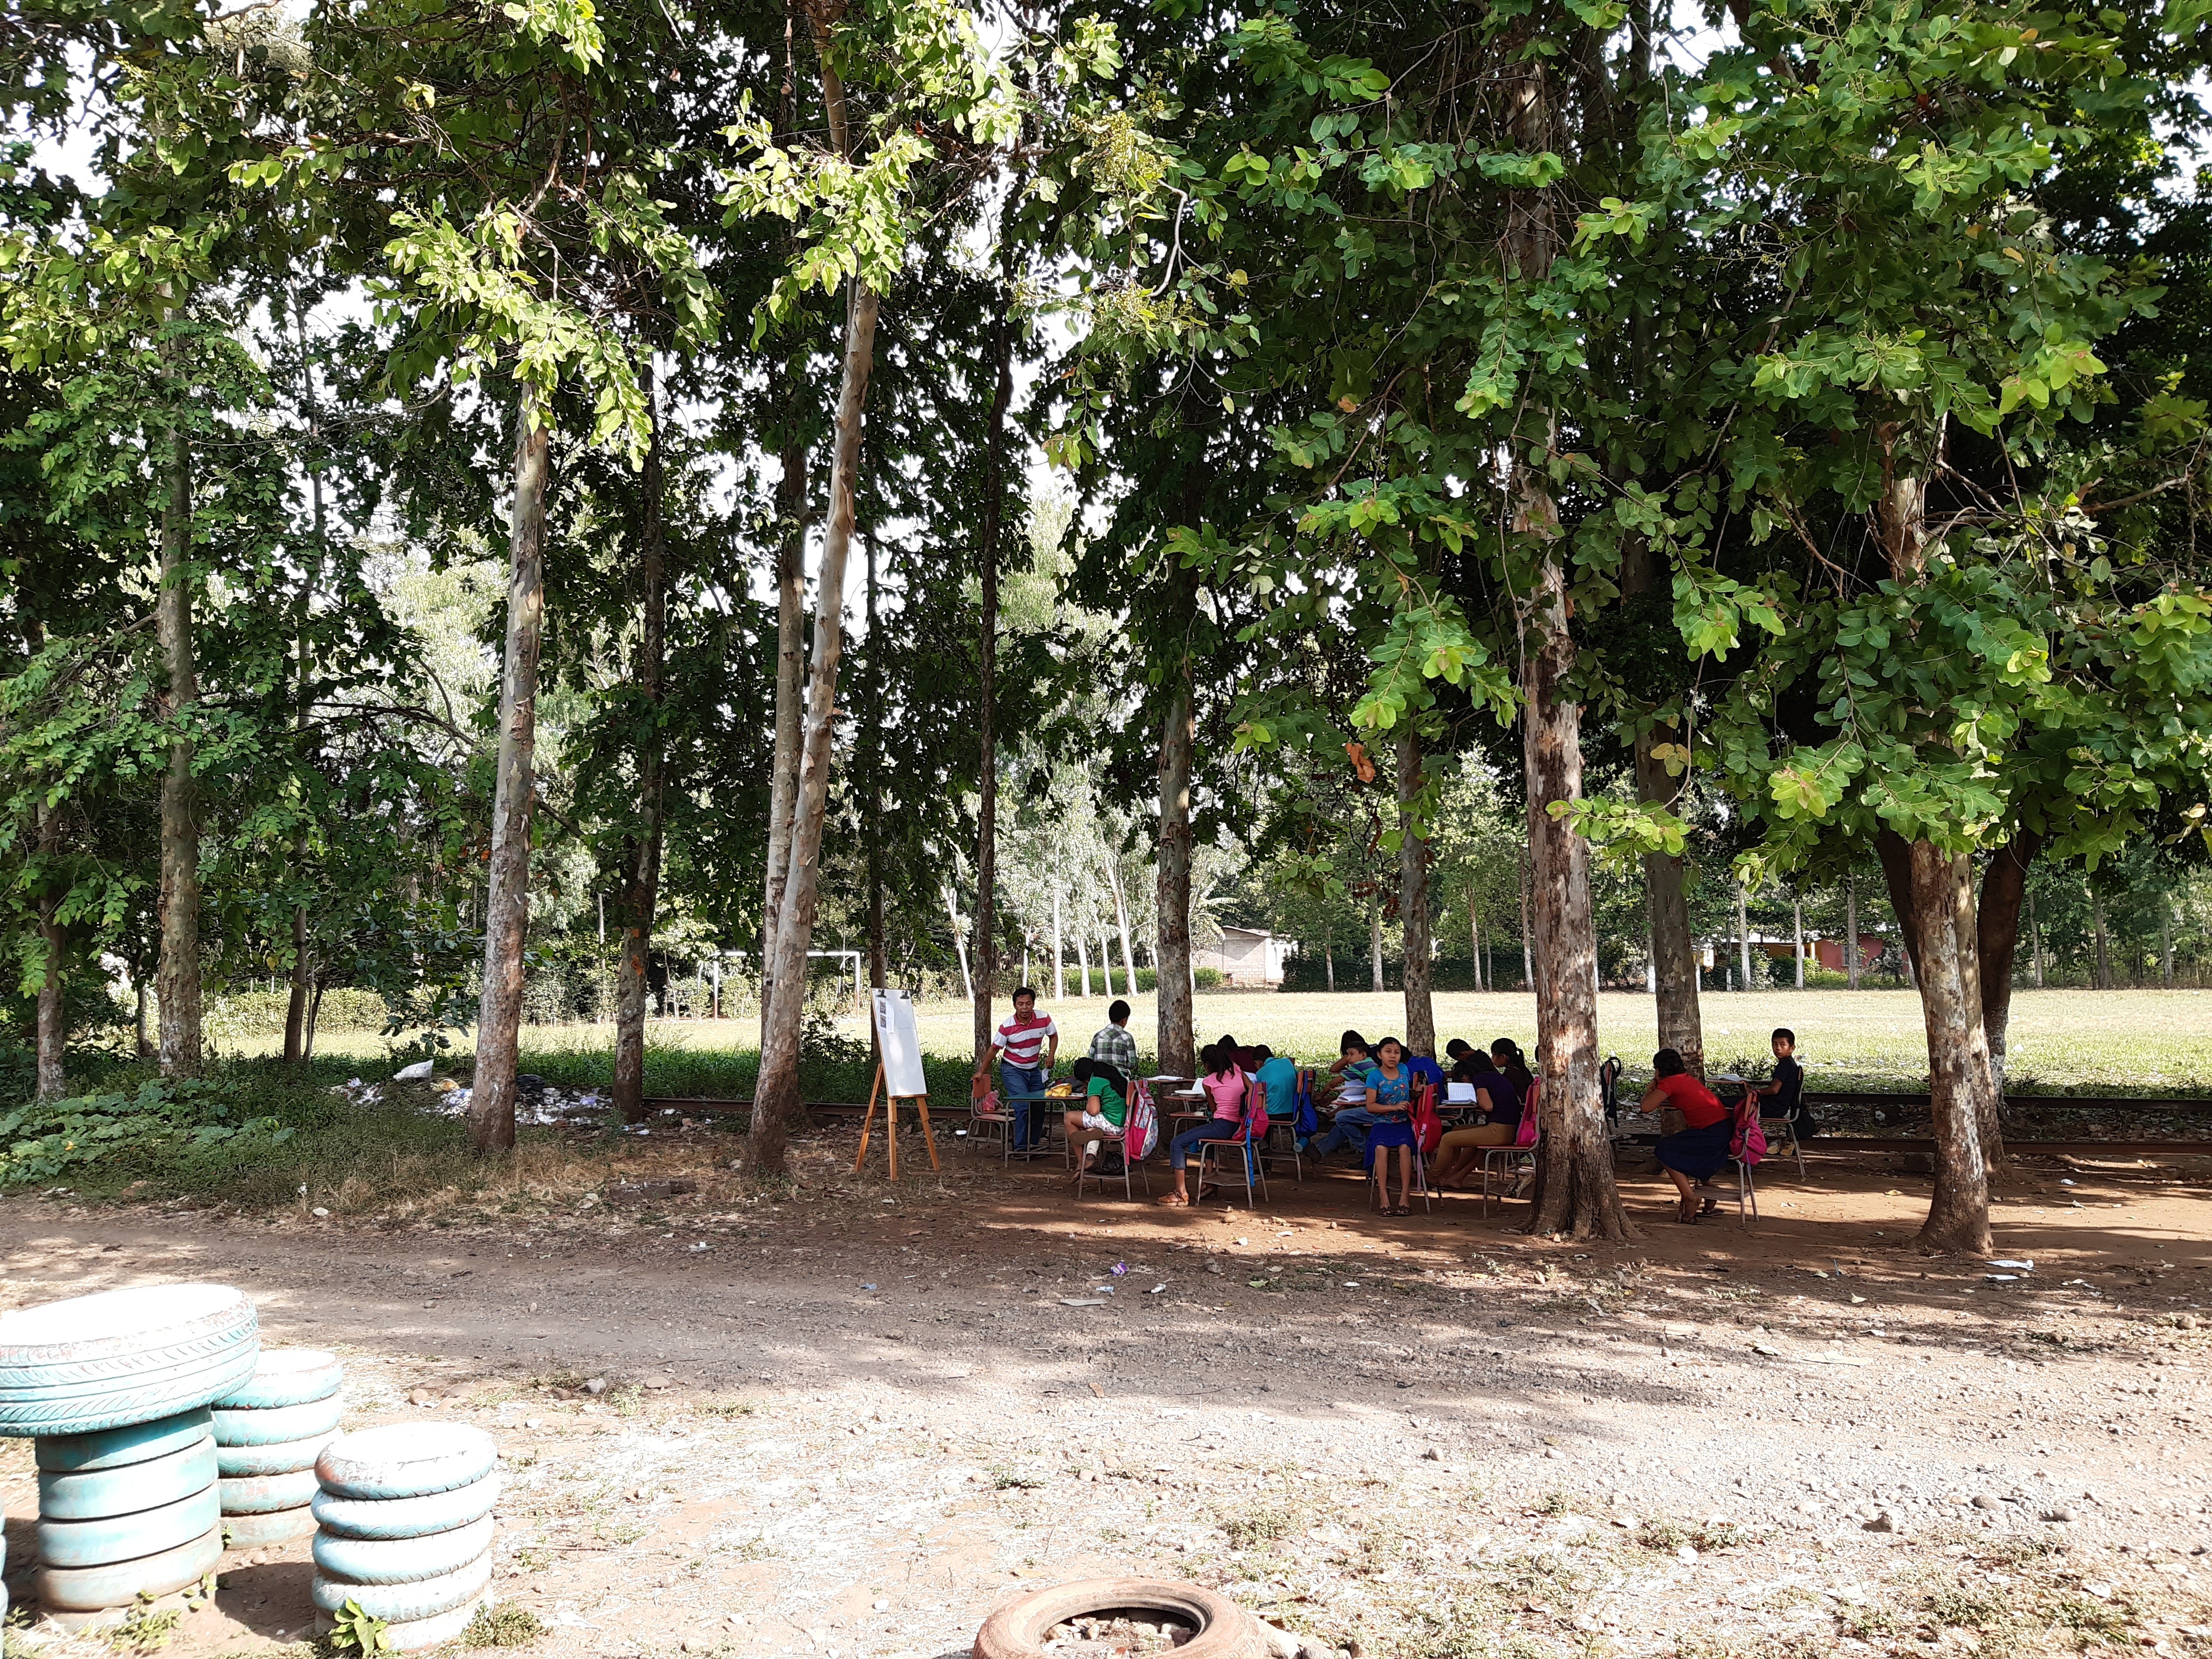 children at desks in an outdoor classroom